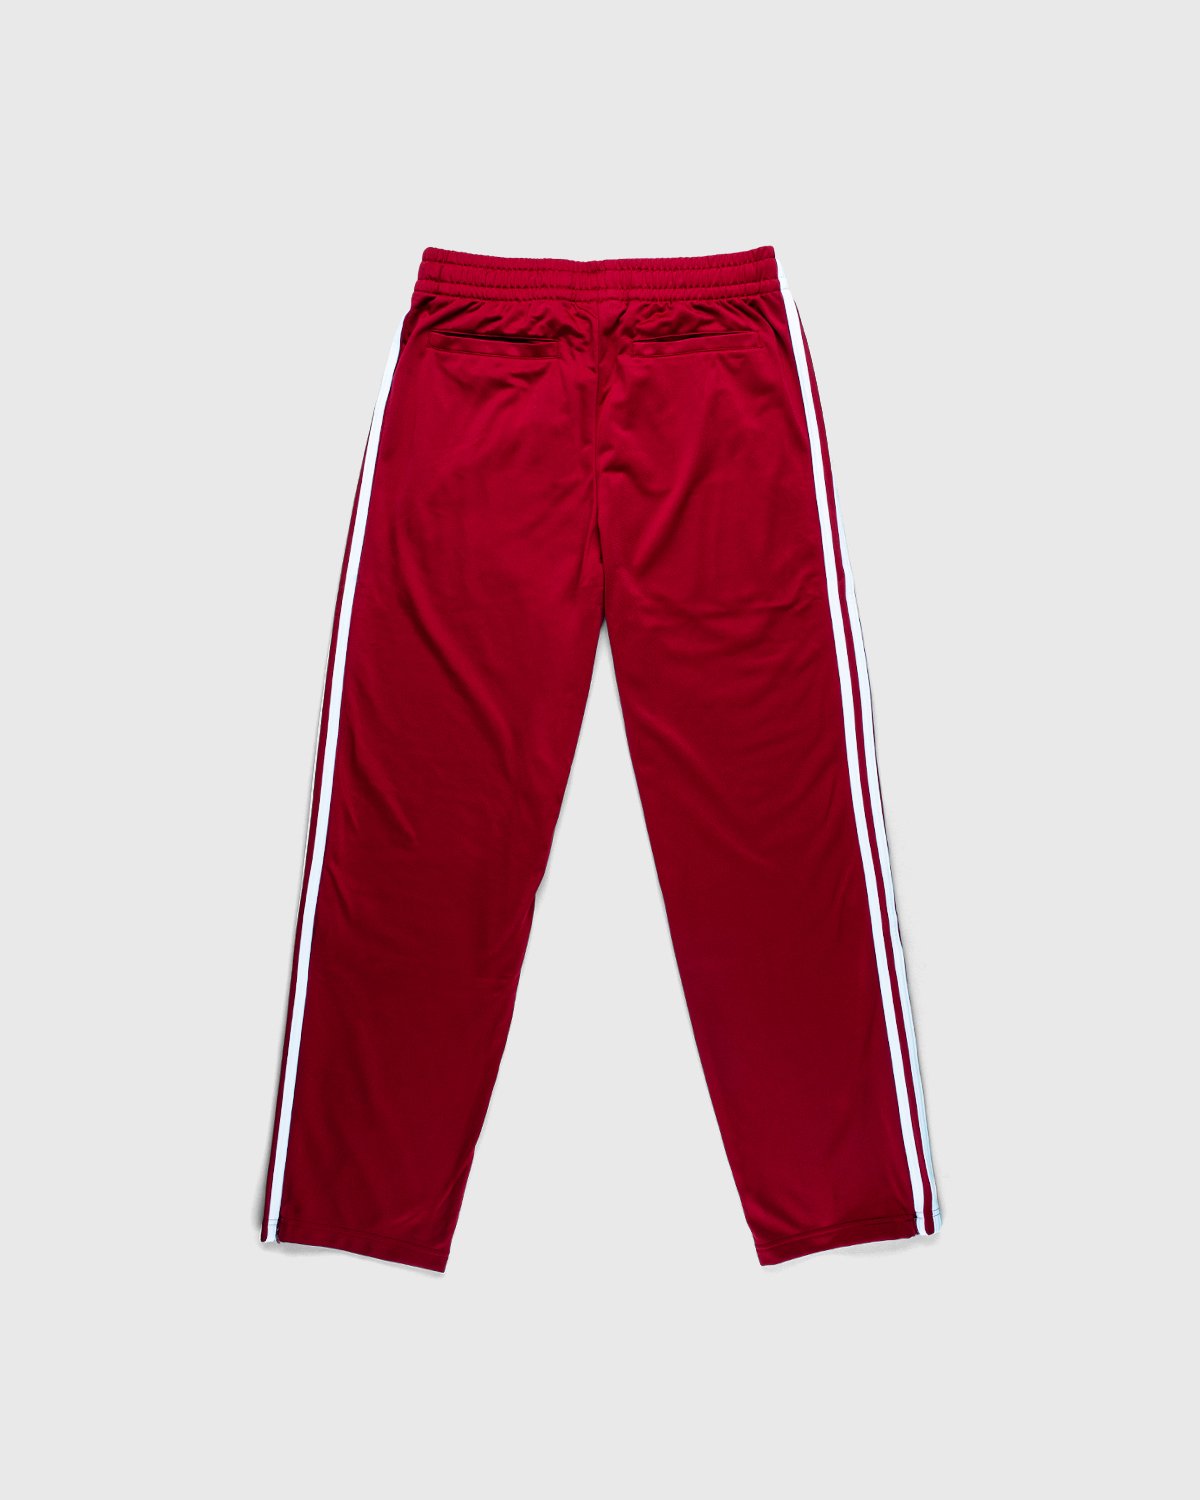 adidas Originals x Human Made - Firebird Track Pants Burgundy - Clothing - Red - Image 2